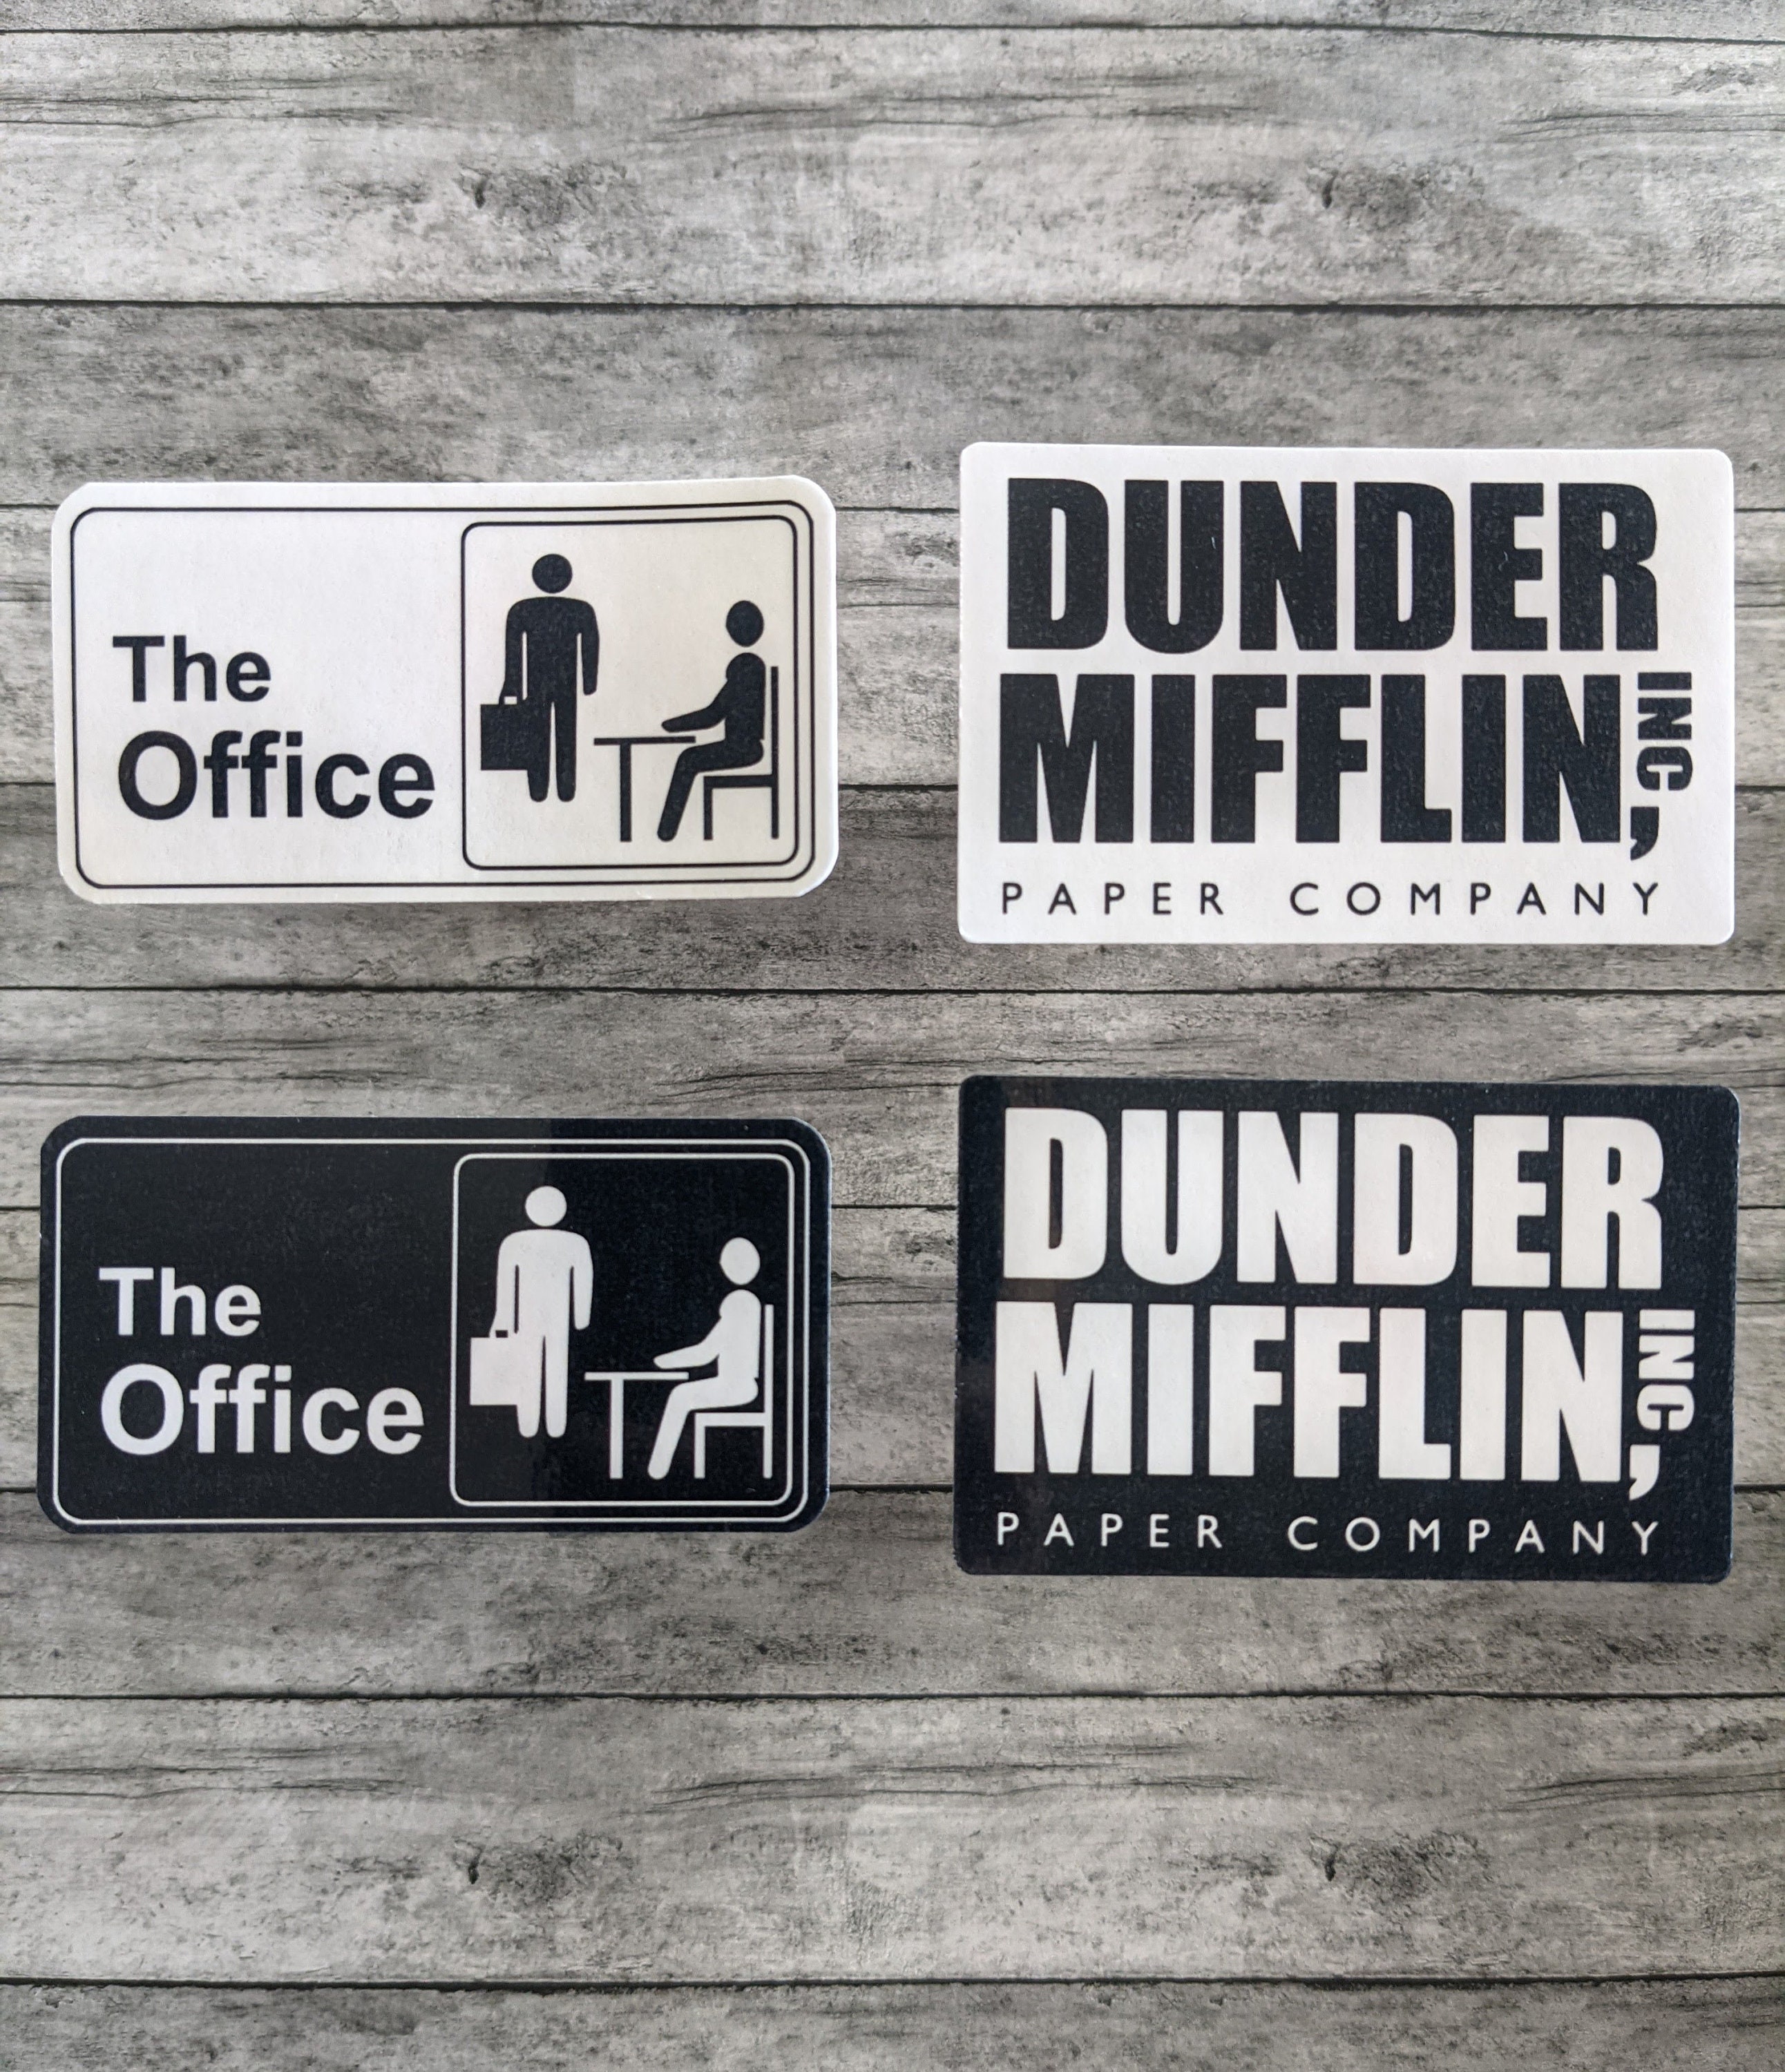 Dunder Mifflin Logo: valor, história, PNG, dunder mifflin existe